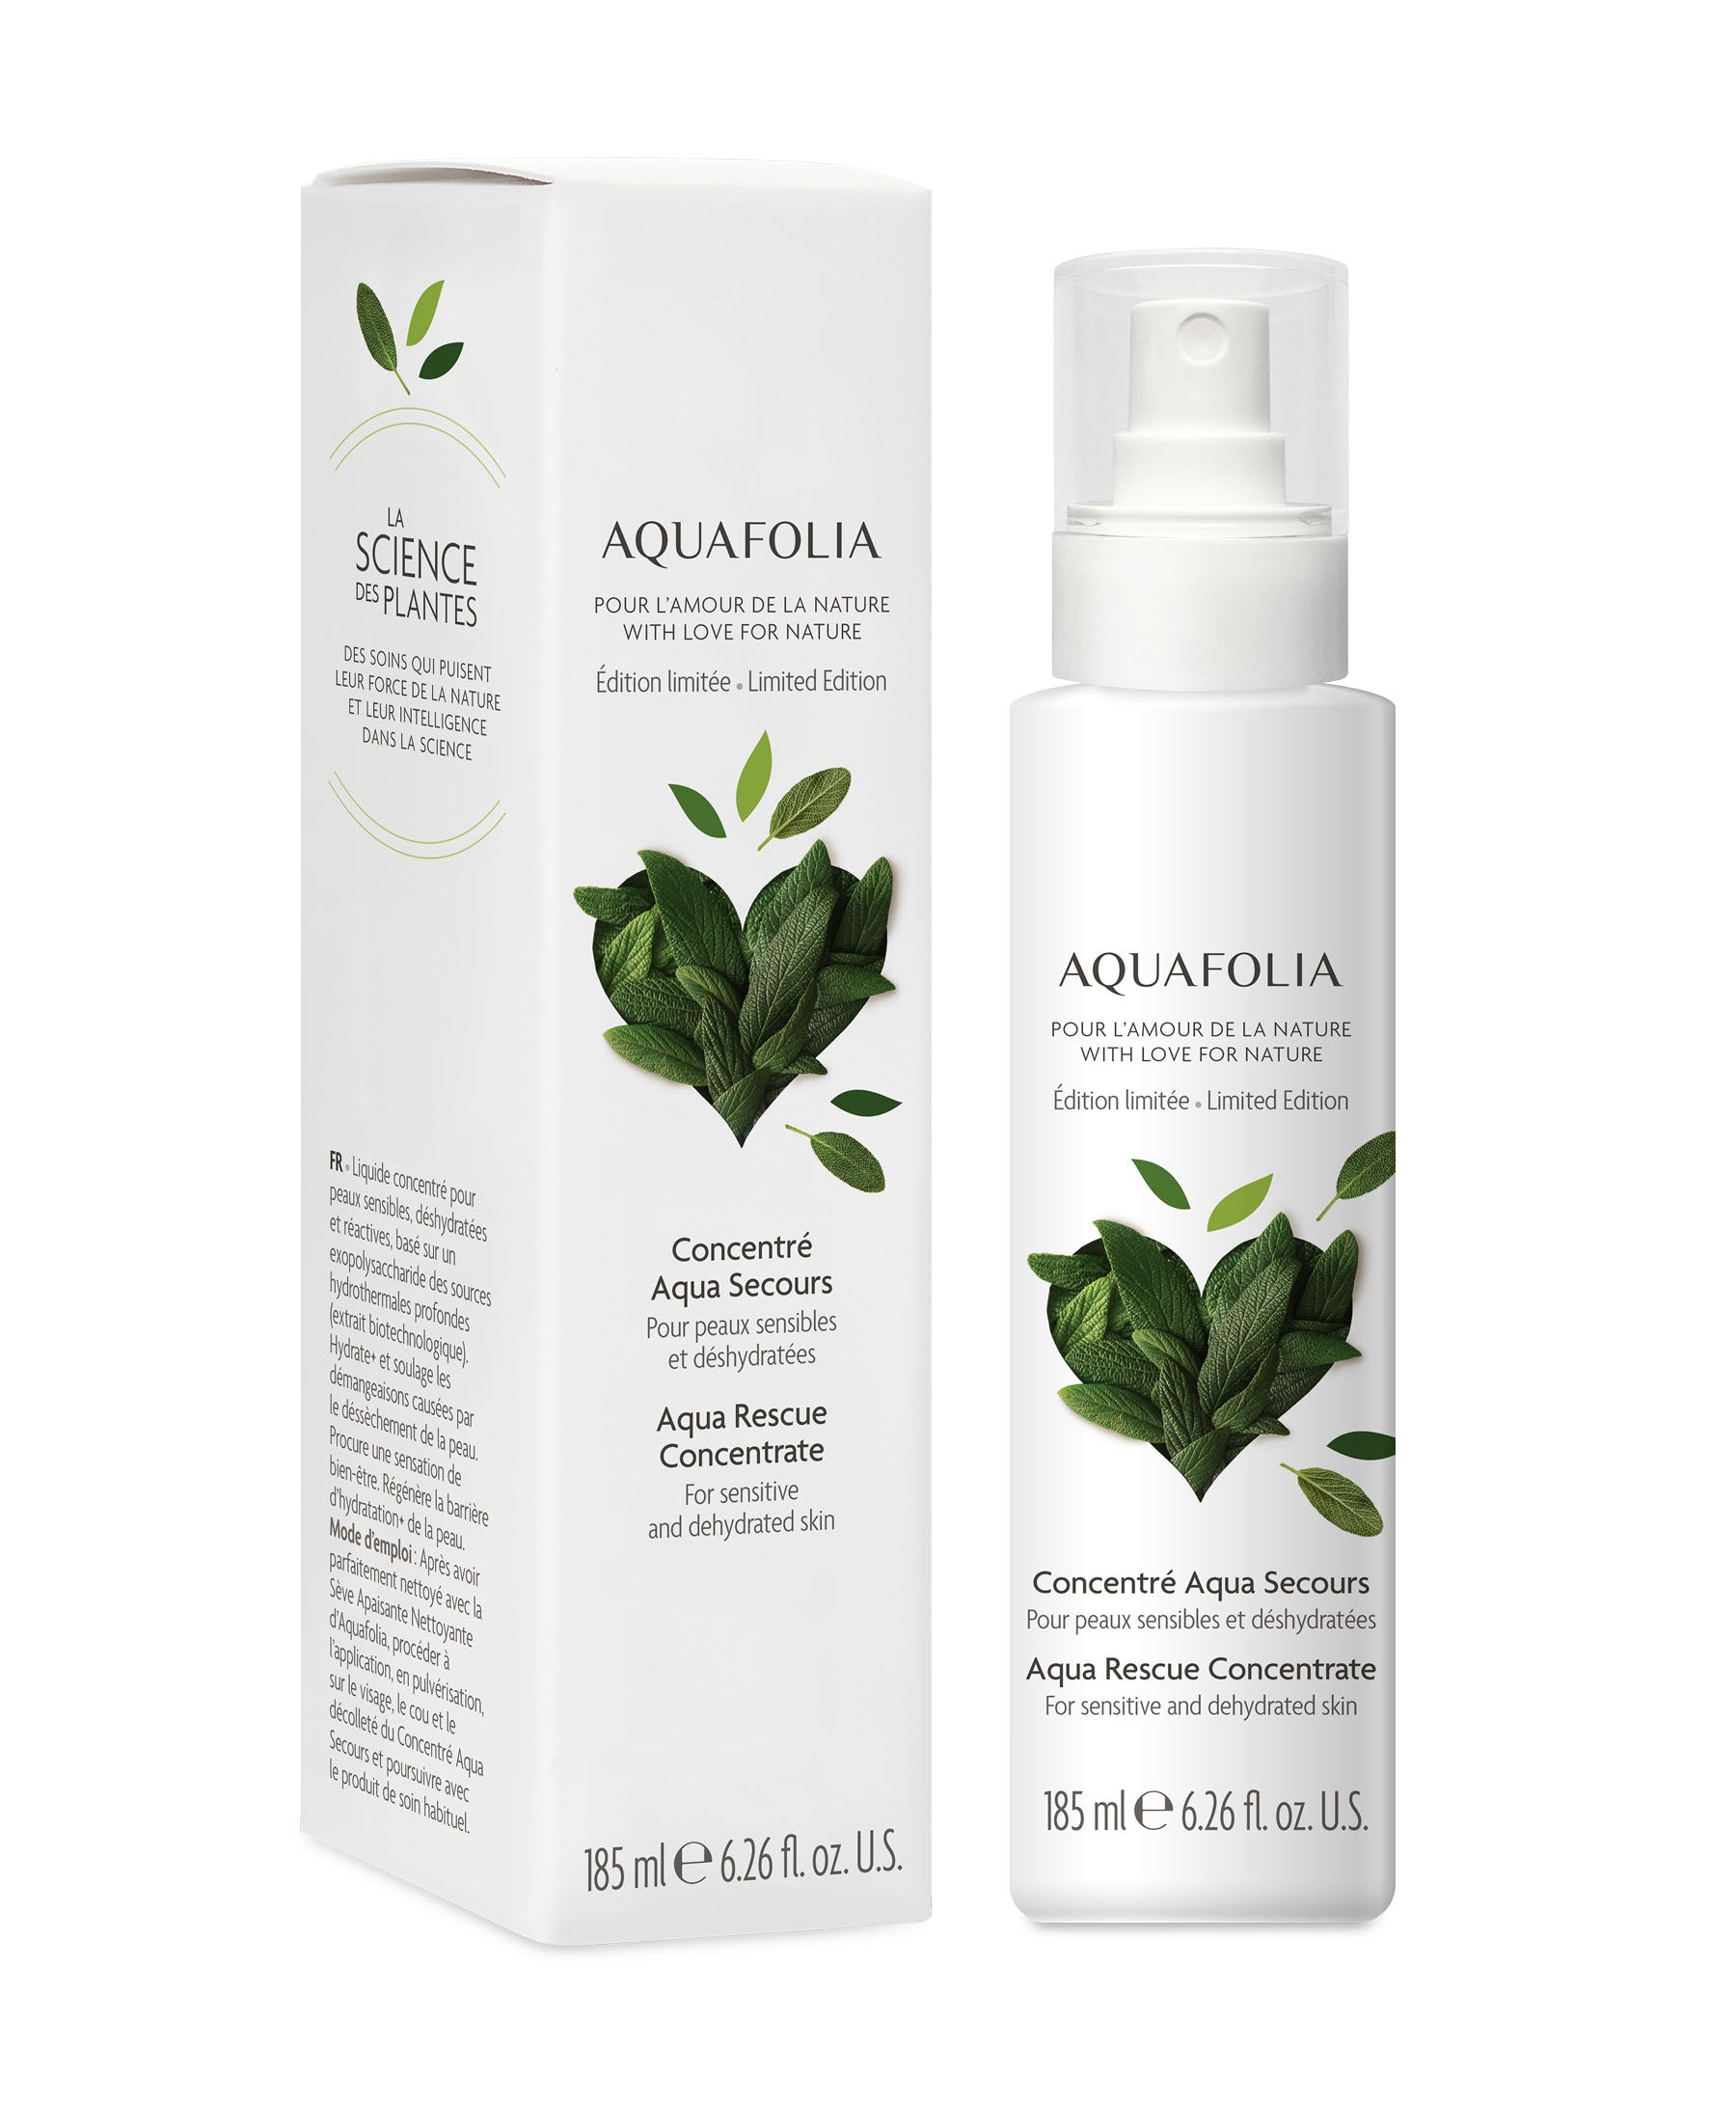 Aquafolia aqua rescue concentrate product image